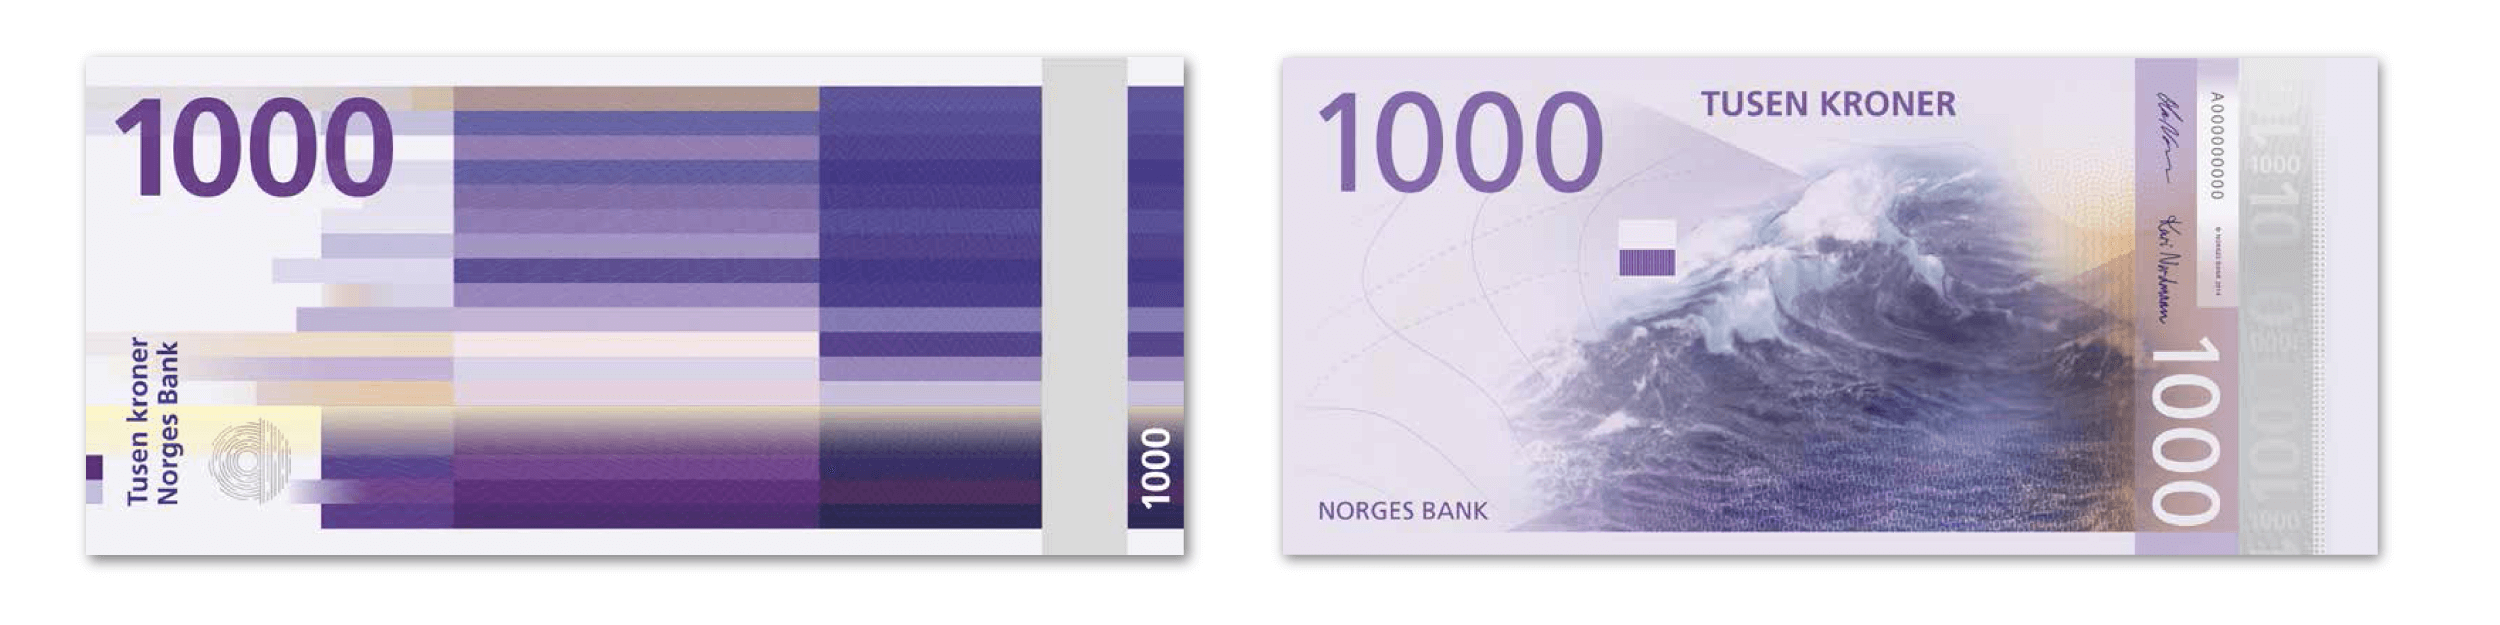 Norway Currency Redesign_1000-kroner